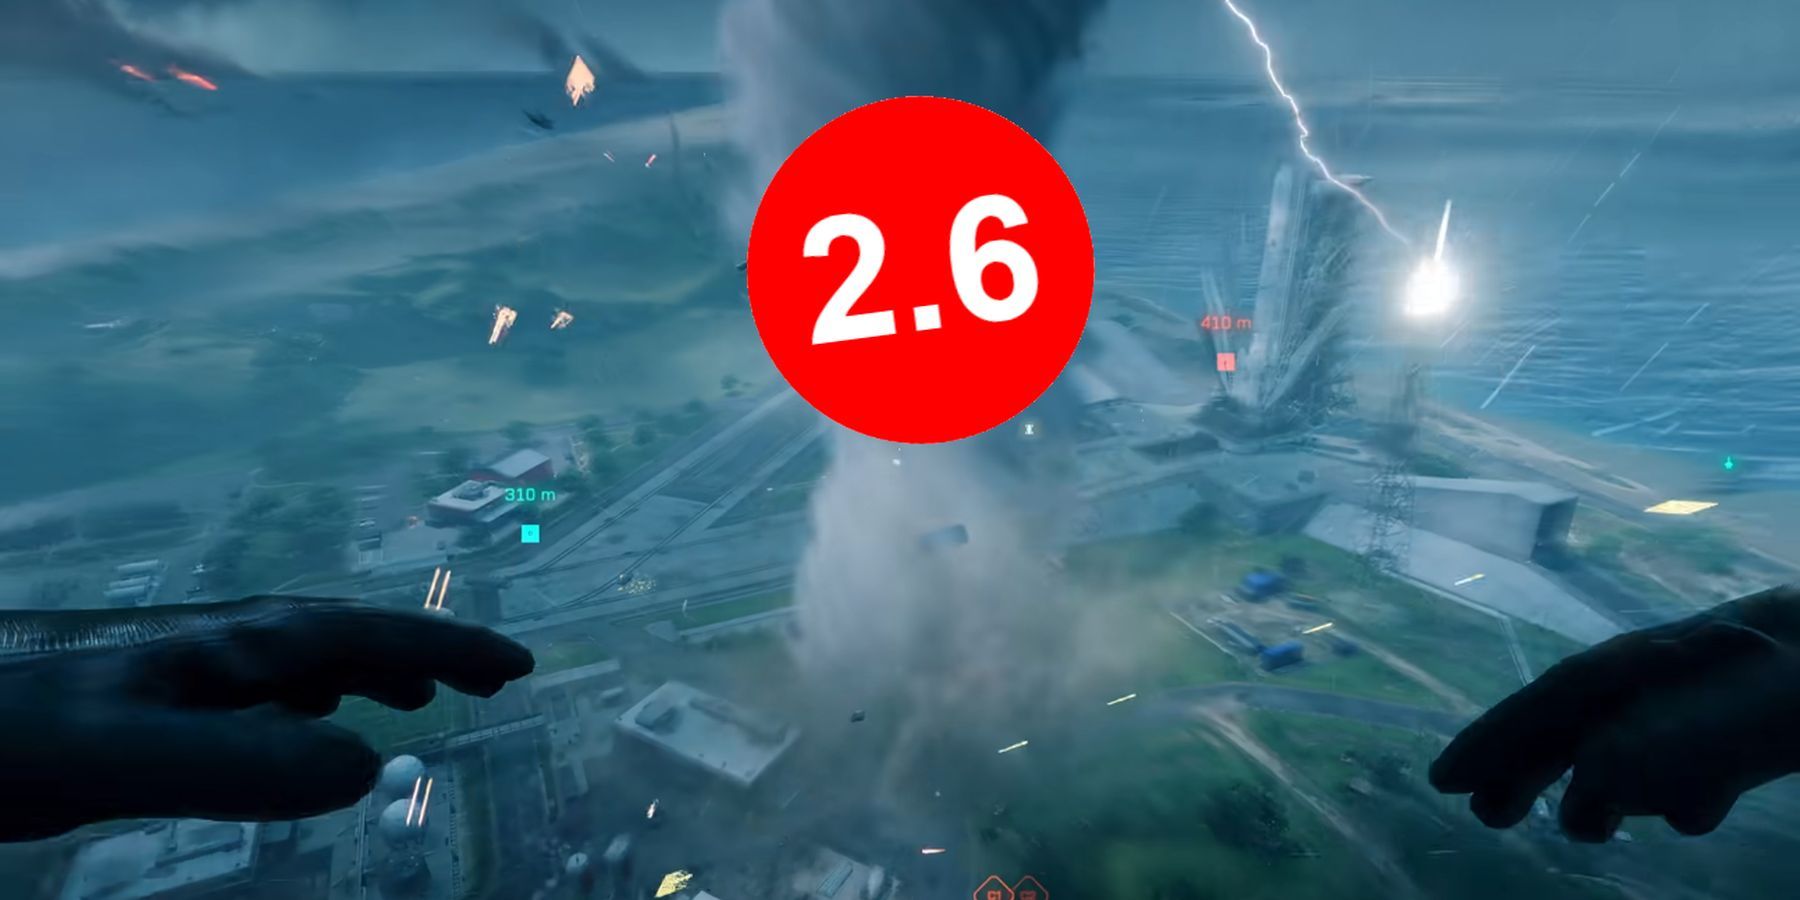 Fun fact: Gran Turismo 7 now has a lower User Score on Metacritic than  Battlefield 2042. : r/battlefield2042